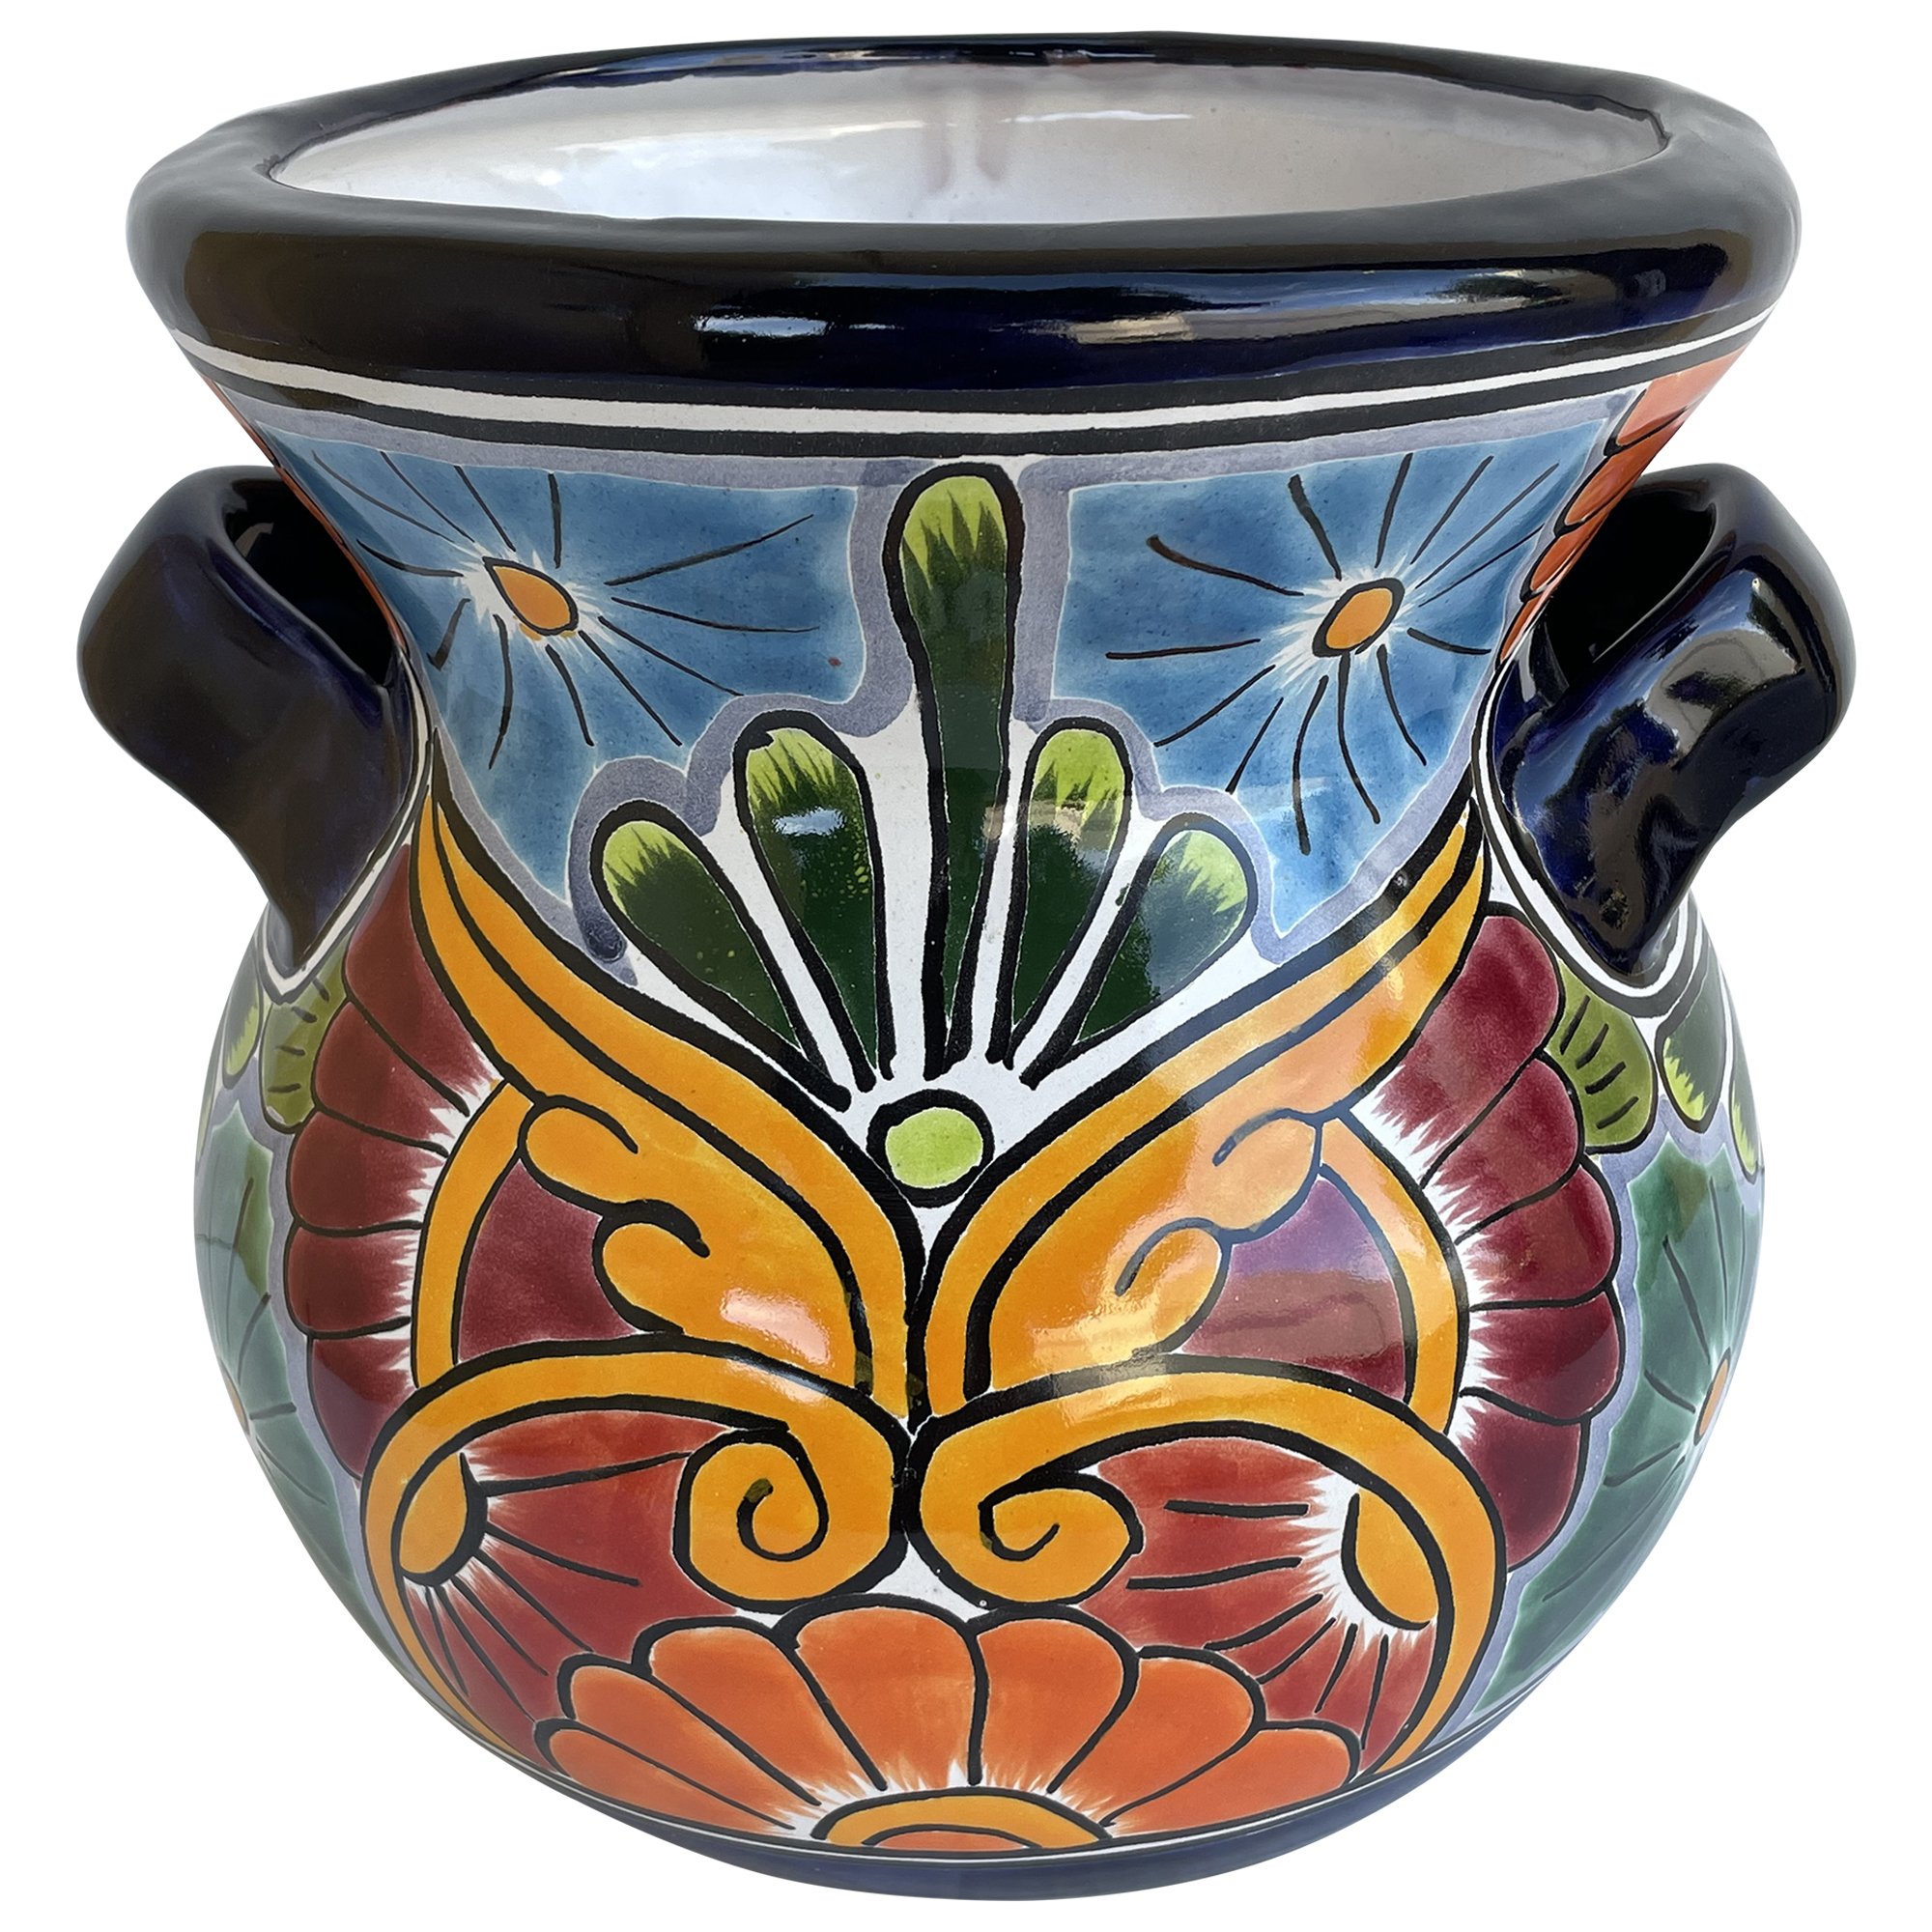 TalaMex Copal Small-Sized Indoors/Outdoors Handmade Mexican Colors Talavera Ceramic Pot Planter